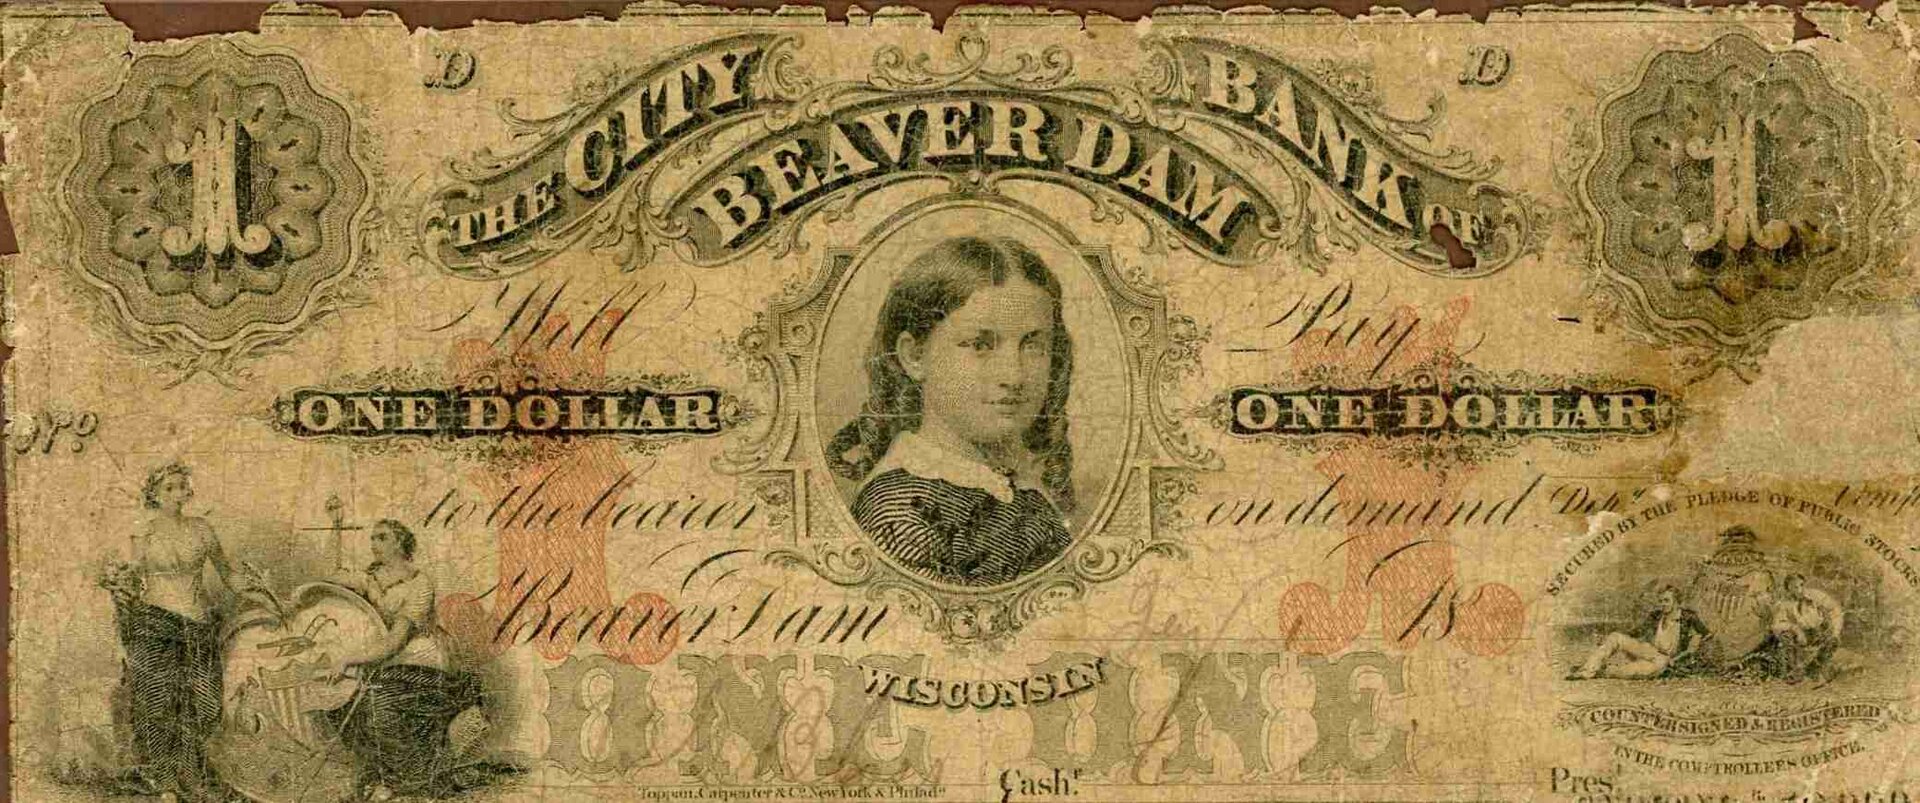 City Bank of Beaver Dam $1 face.jpg